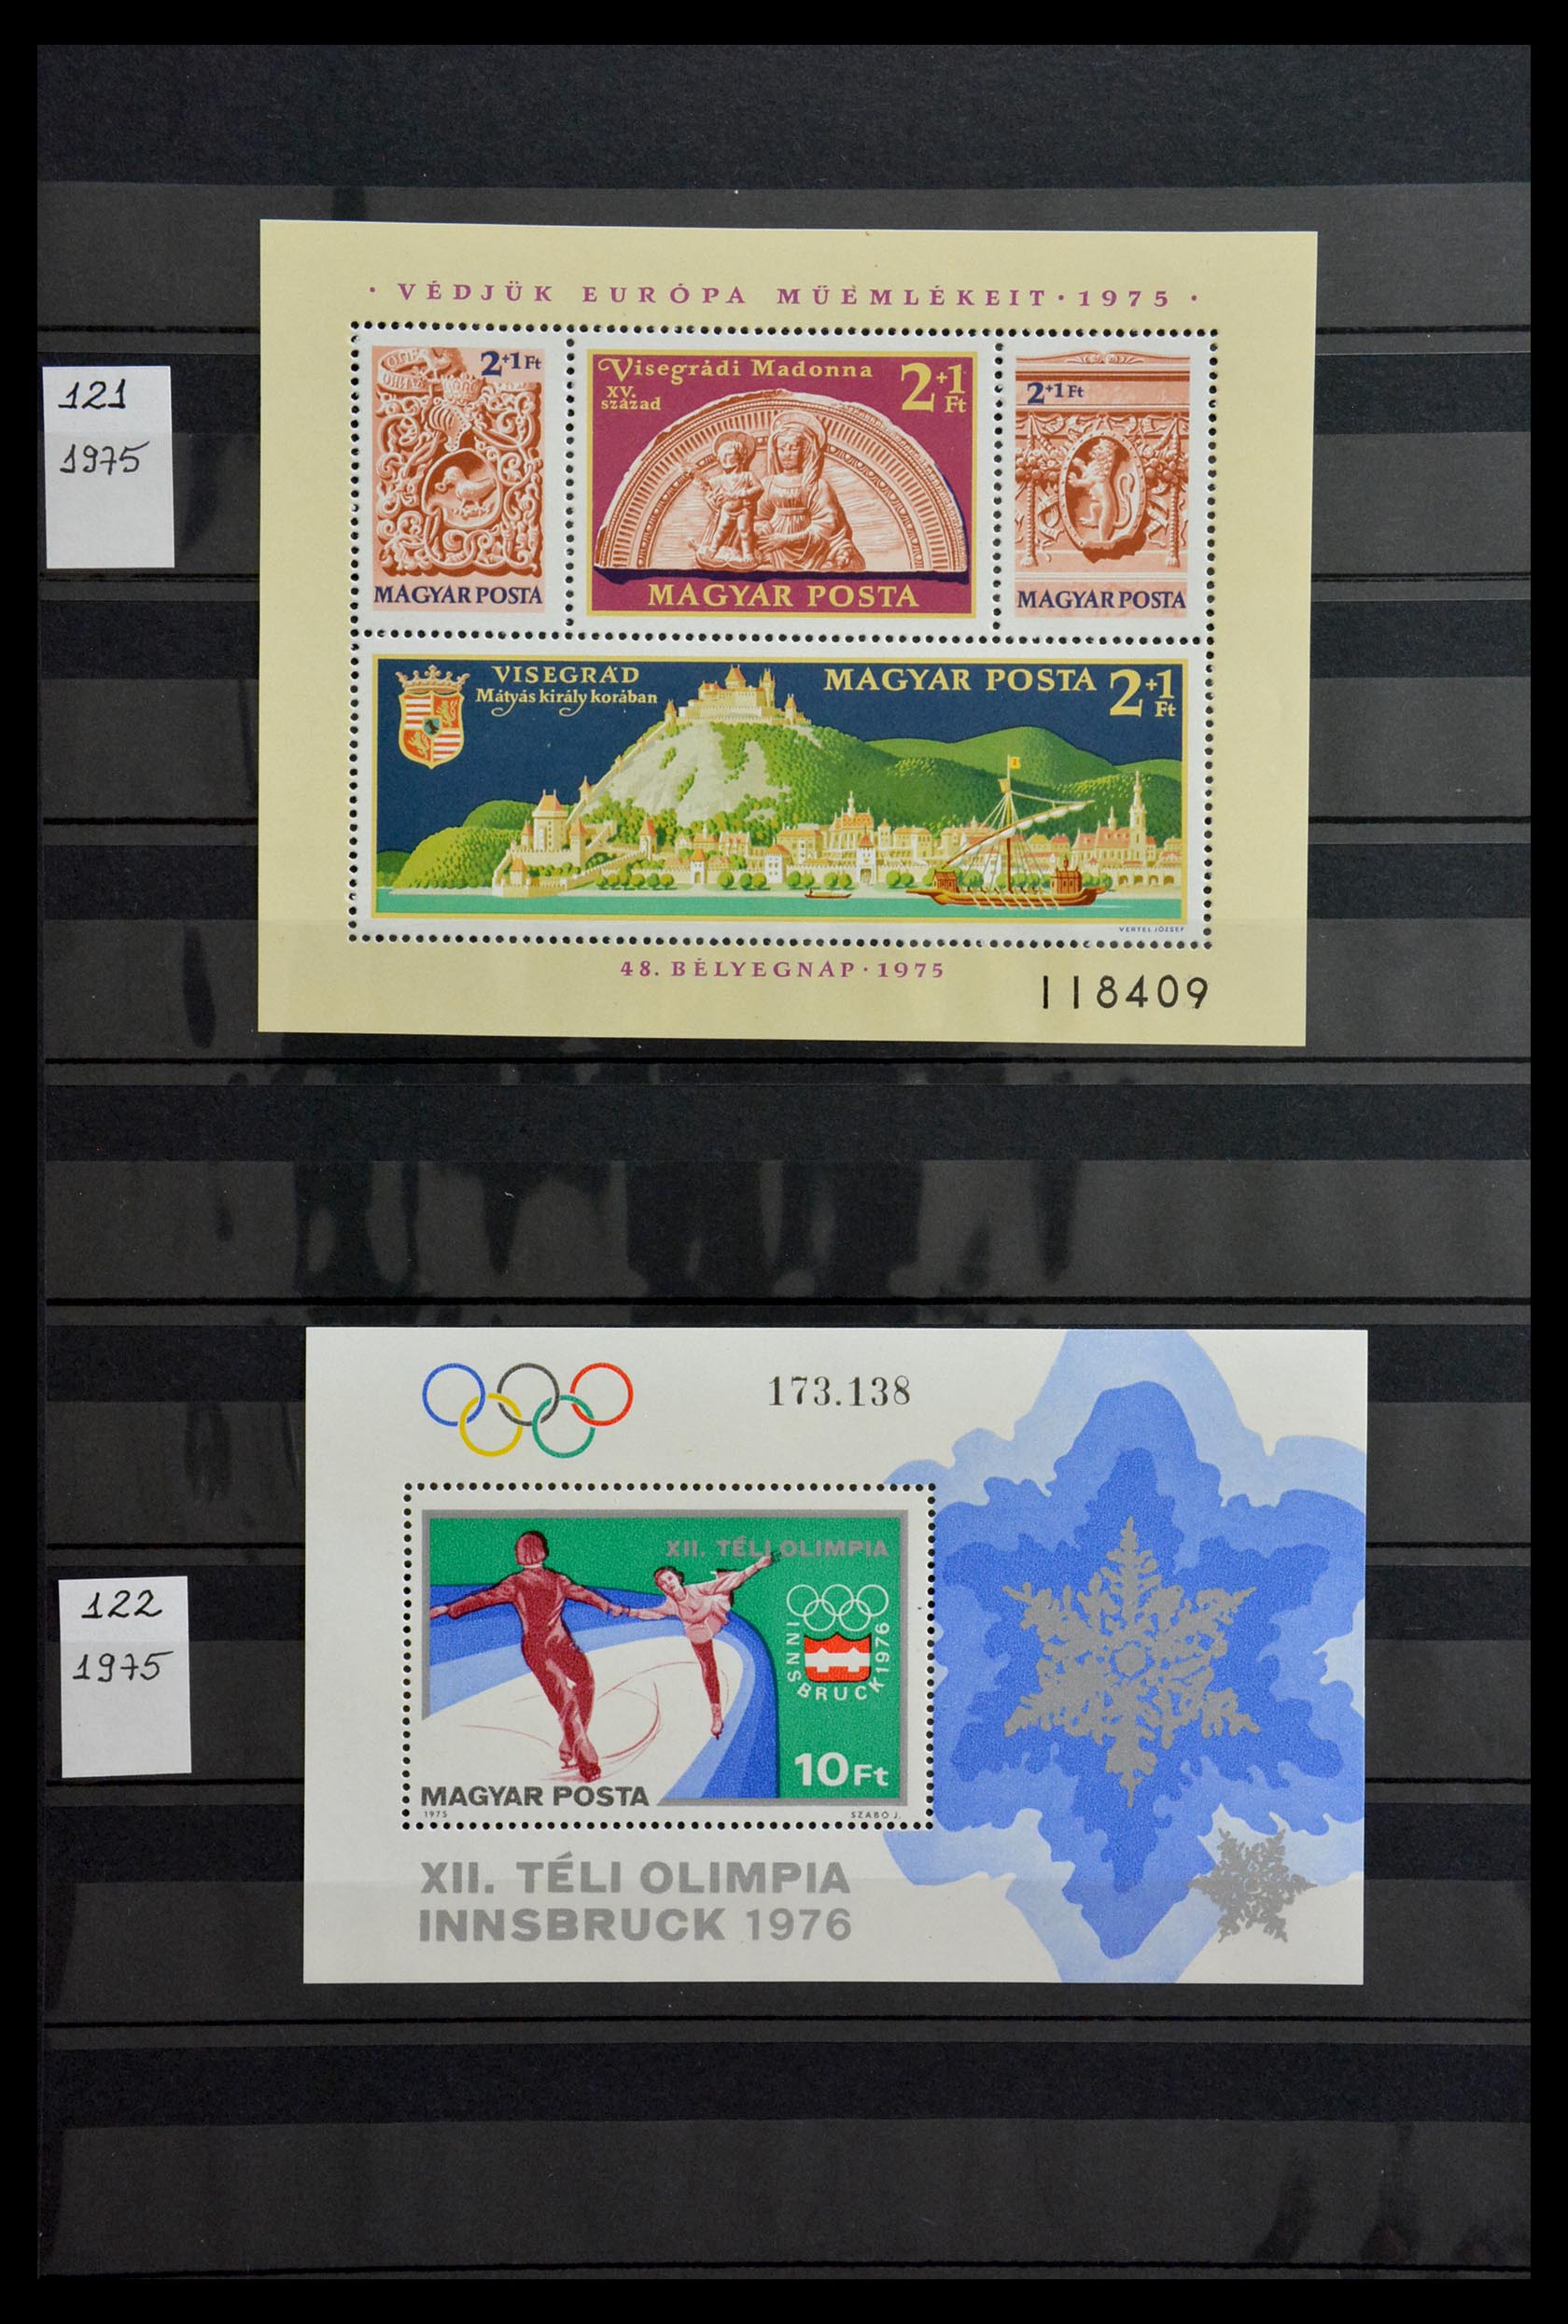 29283 055 - 29283 Hungary souvenir sheets 1938-1984.